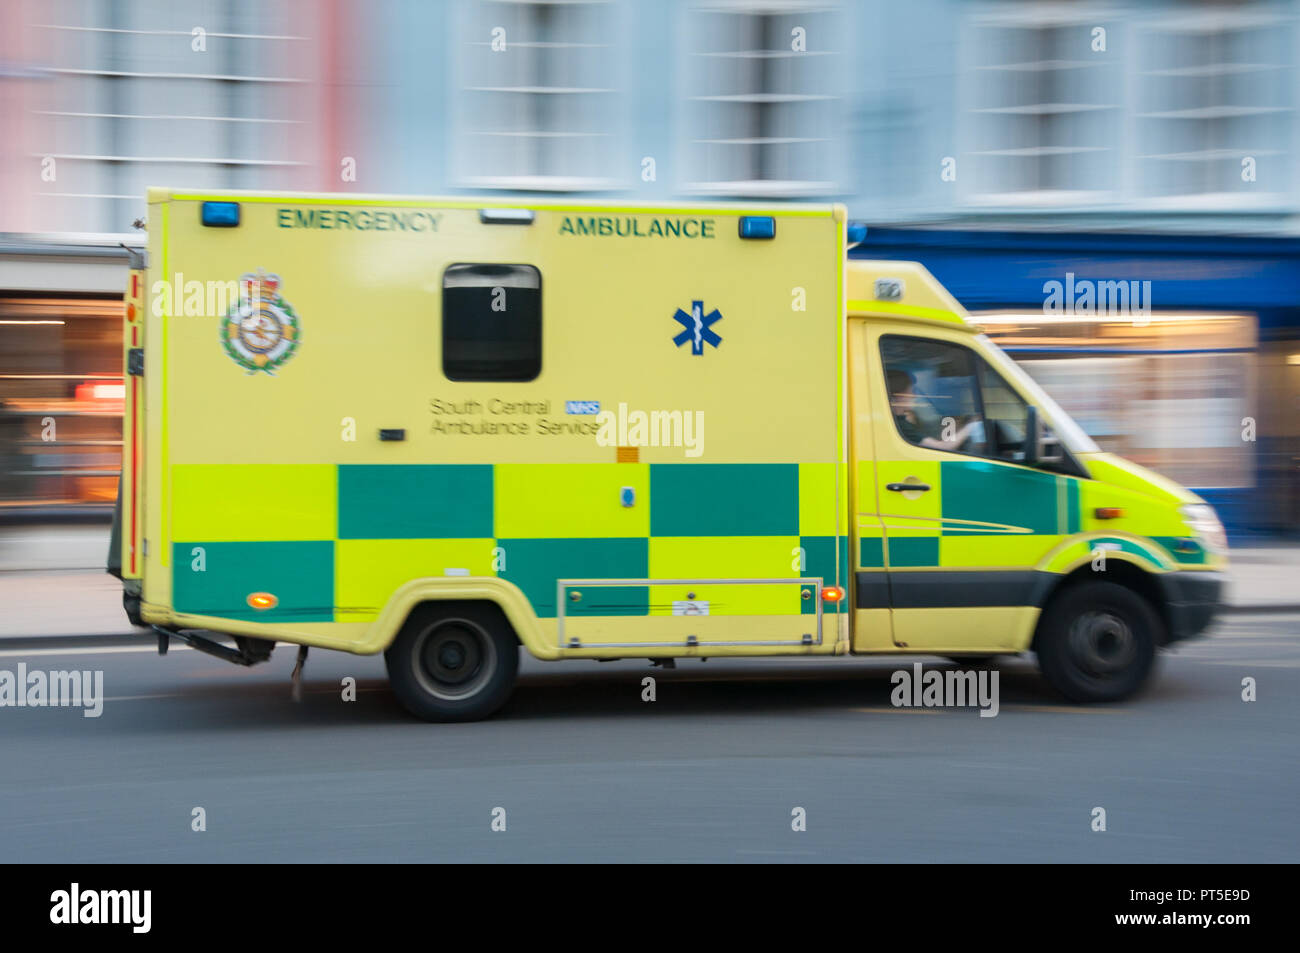 South Central Emergency ambulance car Stock Photo